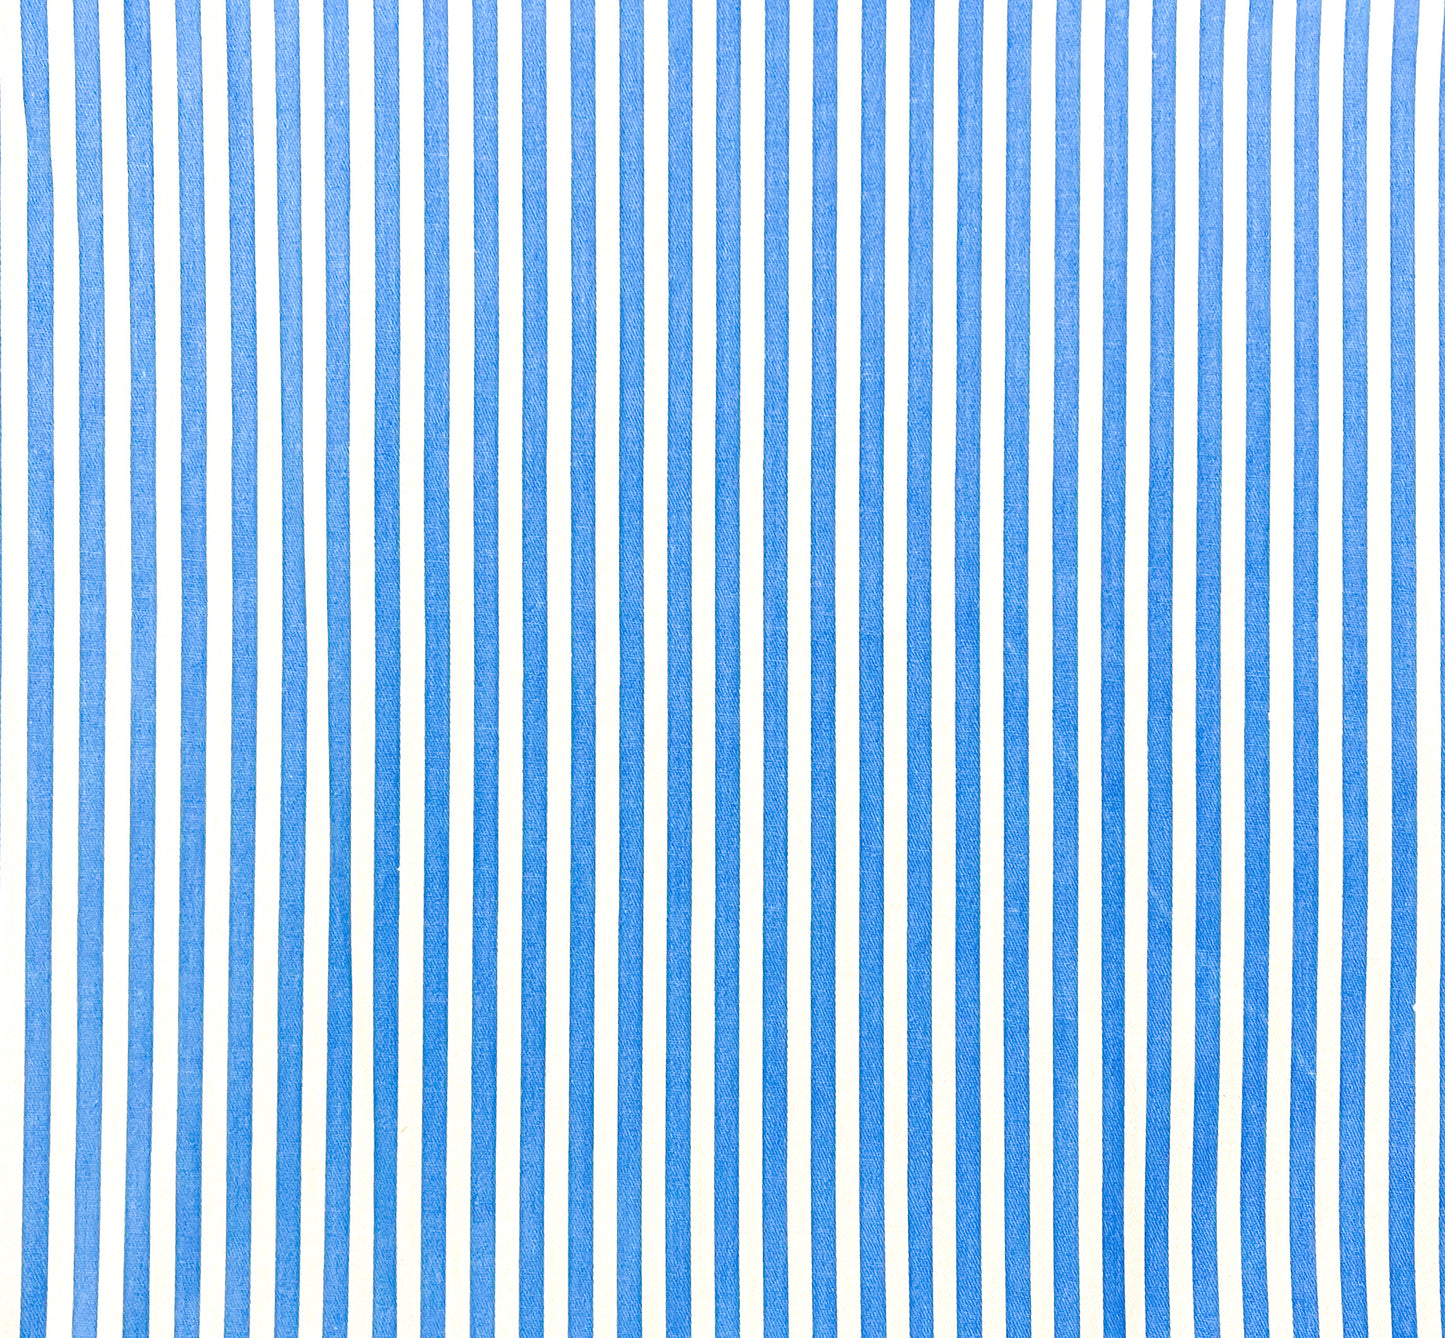 Blue stripes